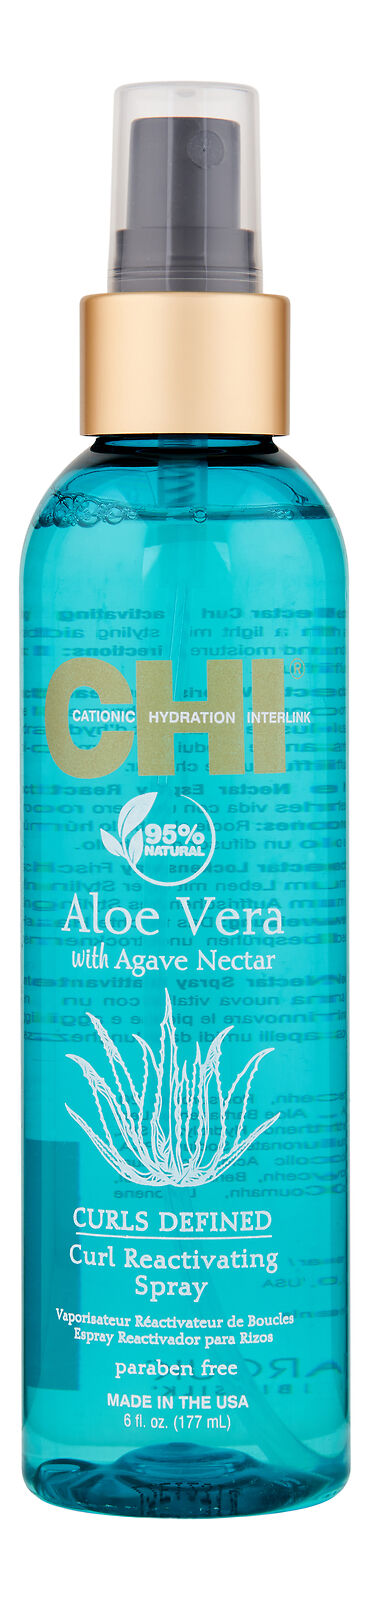 CHI Aloe Vera with Agave Nectar Curl Reactivating Spray 6 fl oz. Hair  Product 633911811573 | eBay